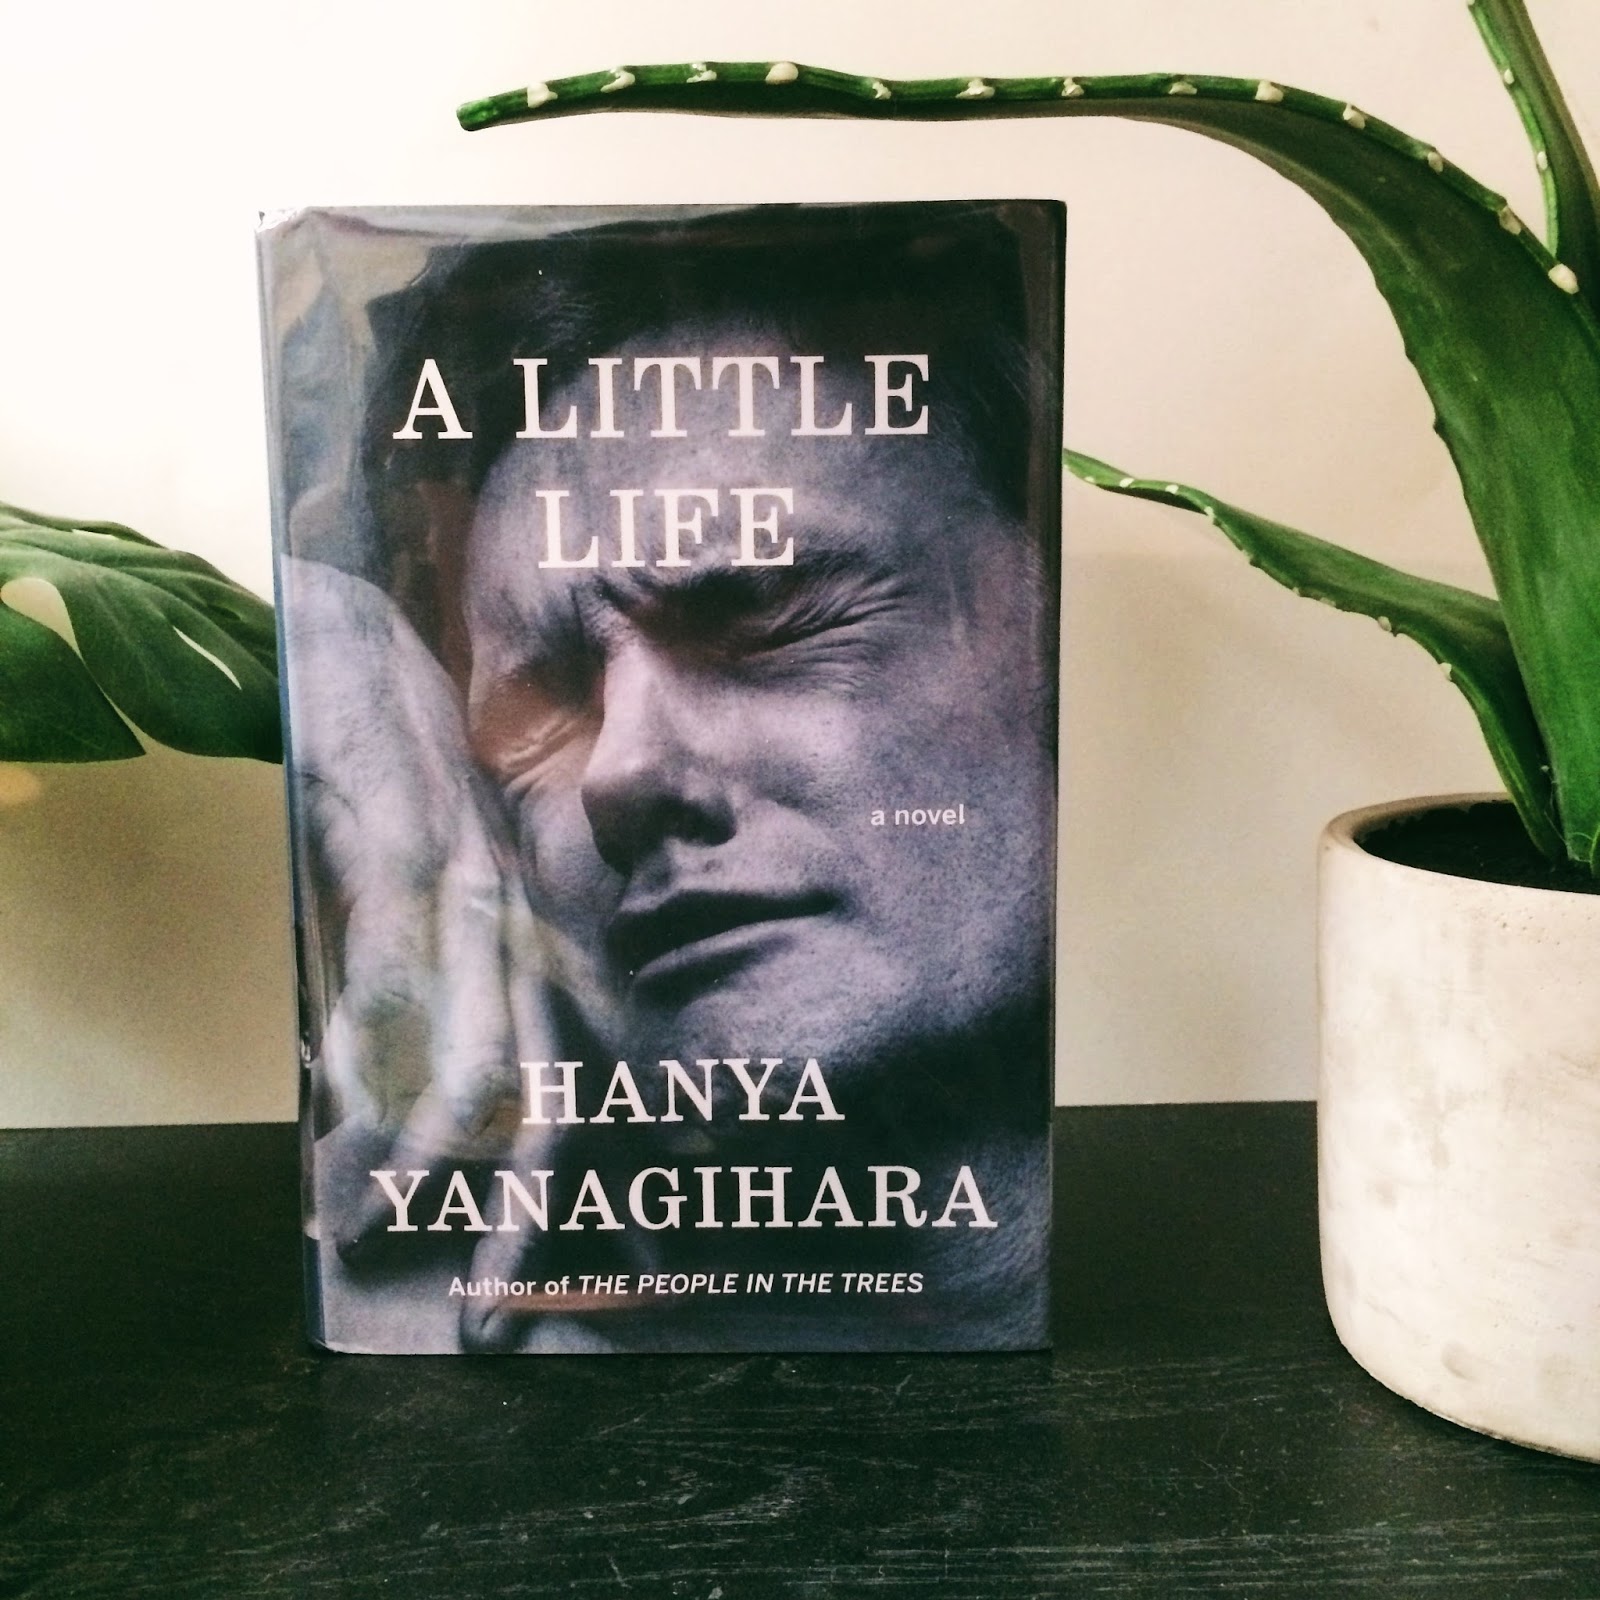 Little life book. A little Life книга. A little Life hanya Yanagihara. A little Life hanya Yanagihara Art. The little Life hanya Yanagihara обложка.